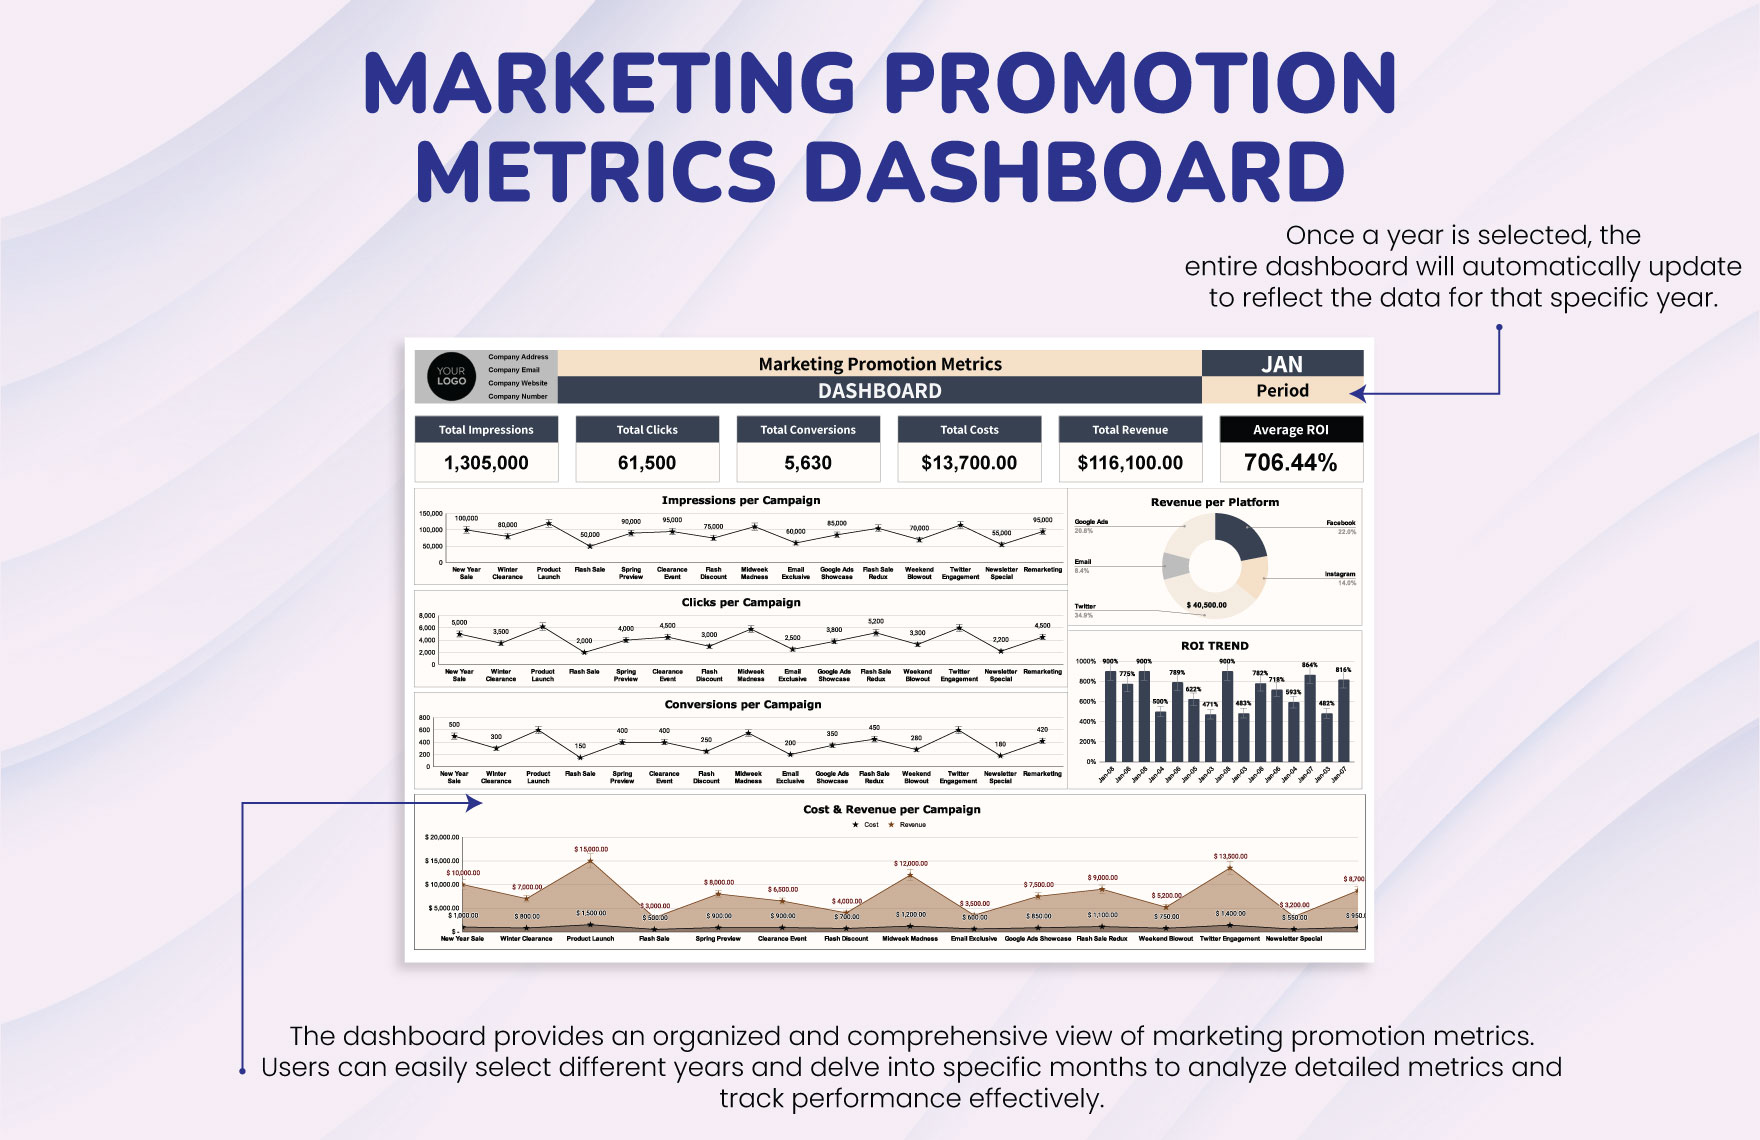 Marketing Promotion Metrics Dashboard Template